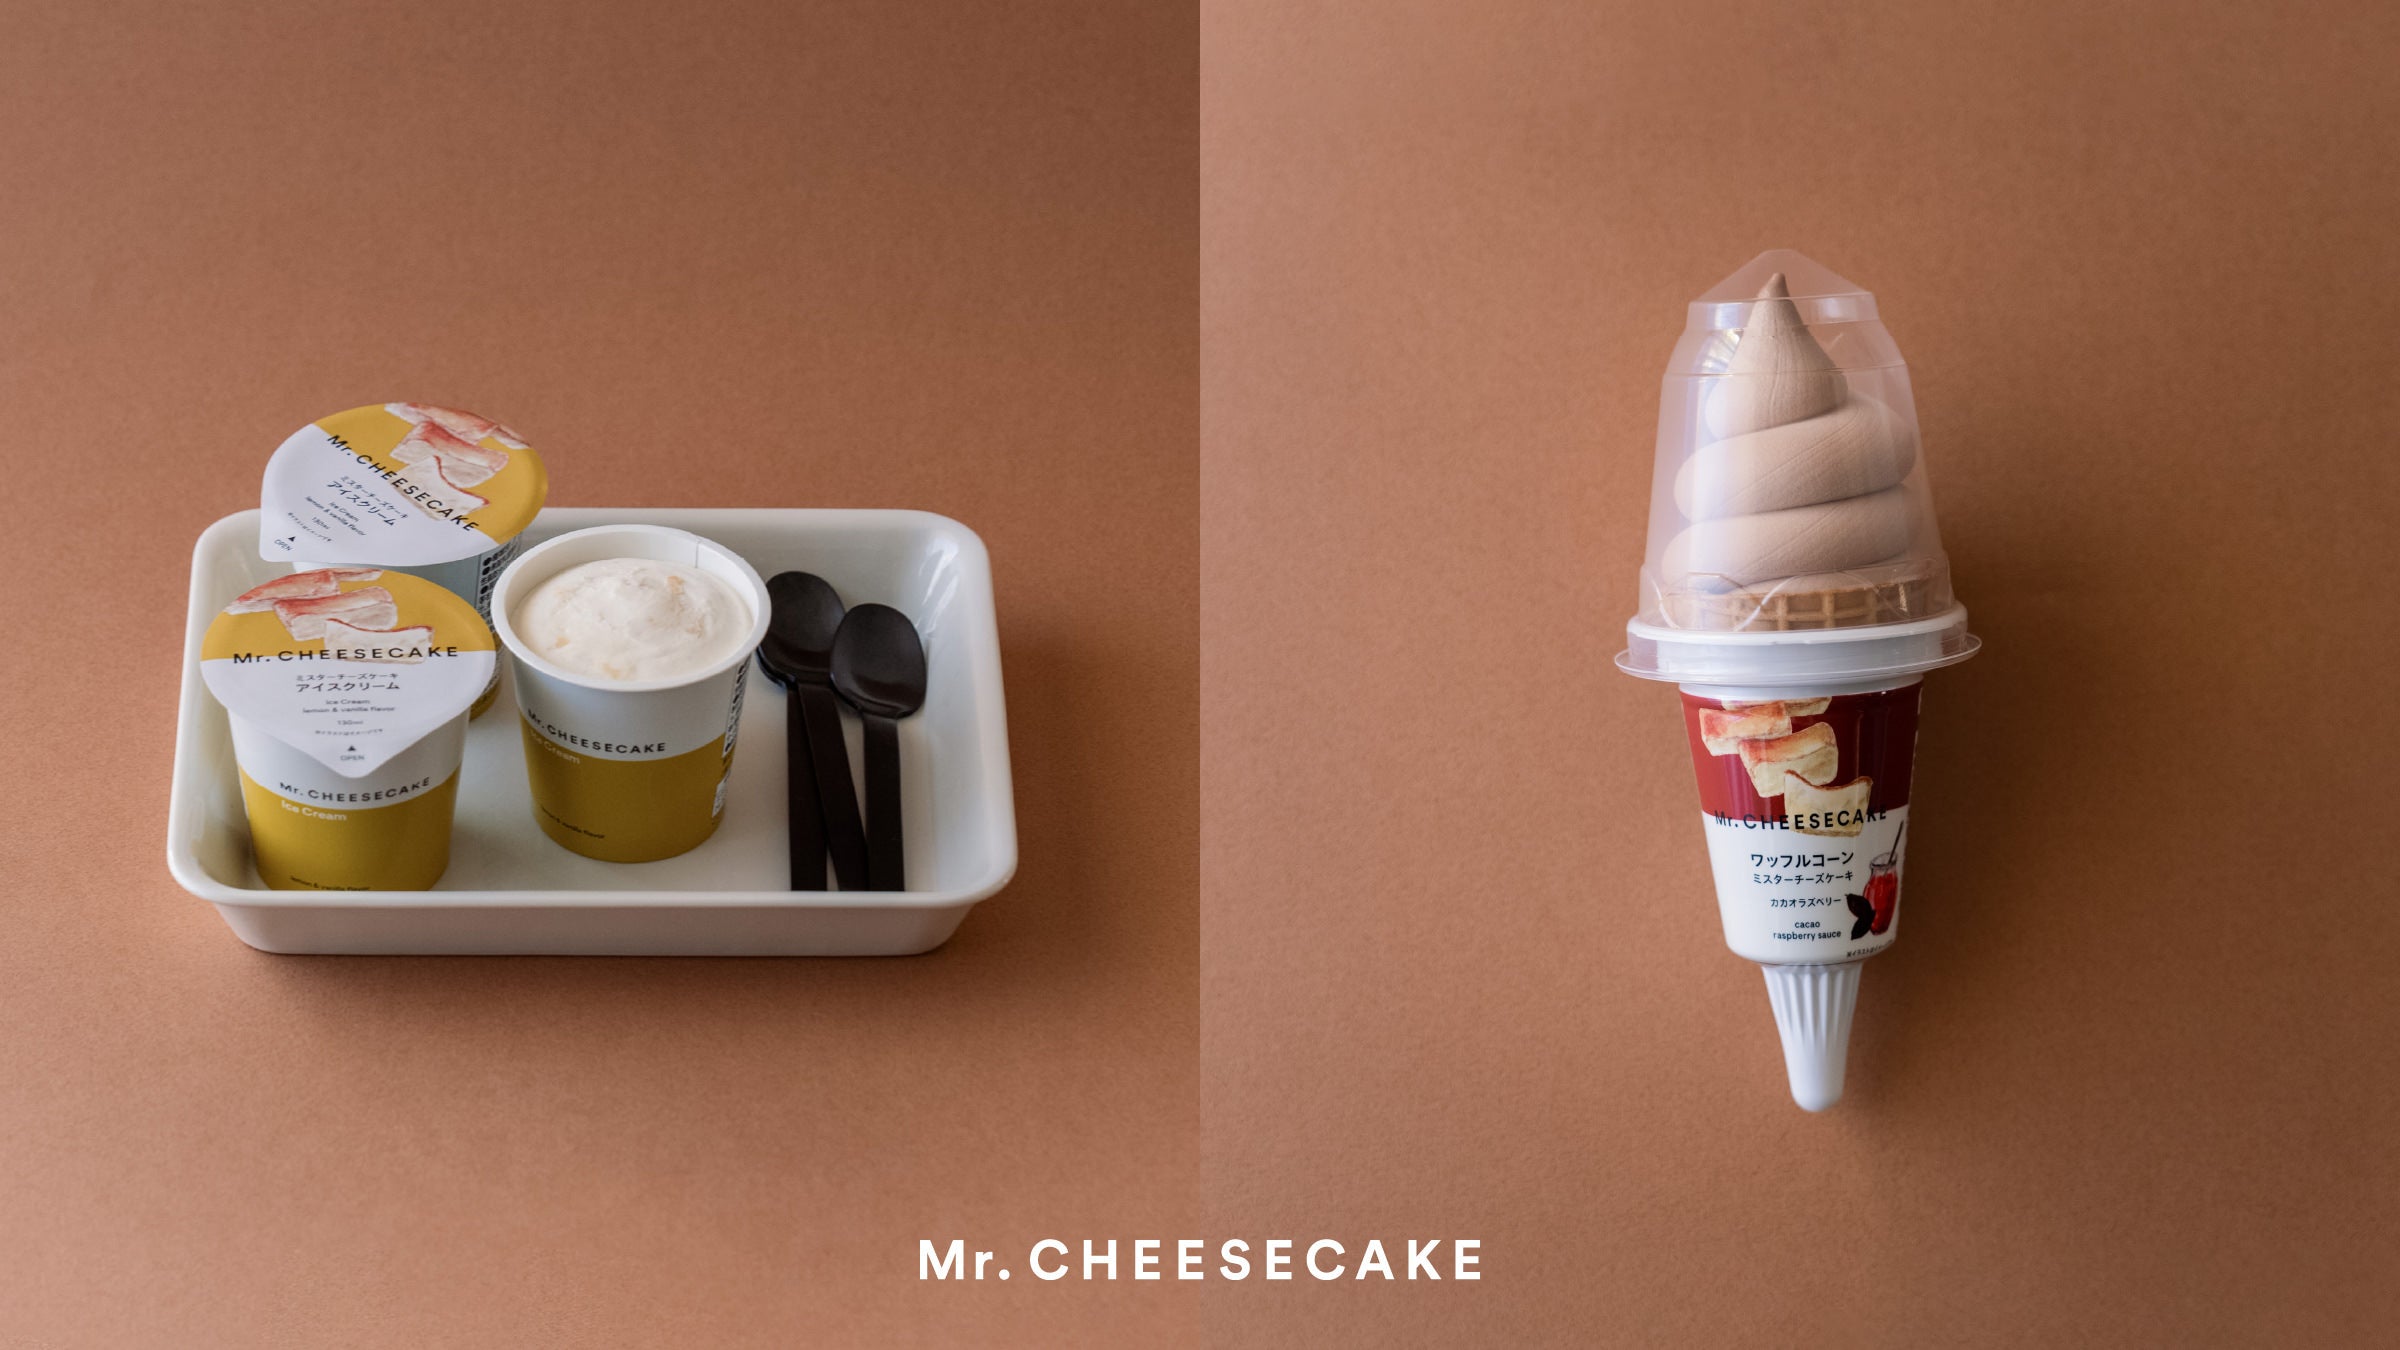 Mr Cheesecake セブン イレブン コラボレーションアイス2種 大好評につき 数量限定で再販売が決定 ワッフルコーン ミス